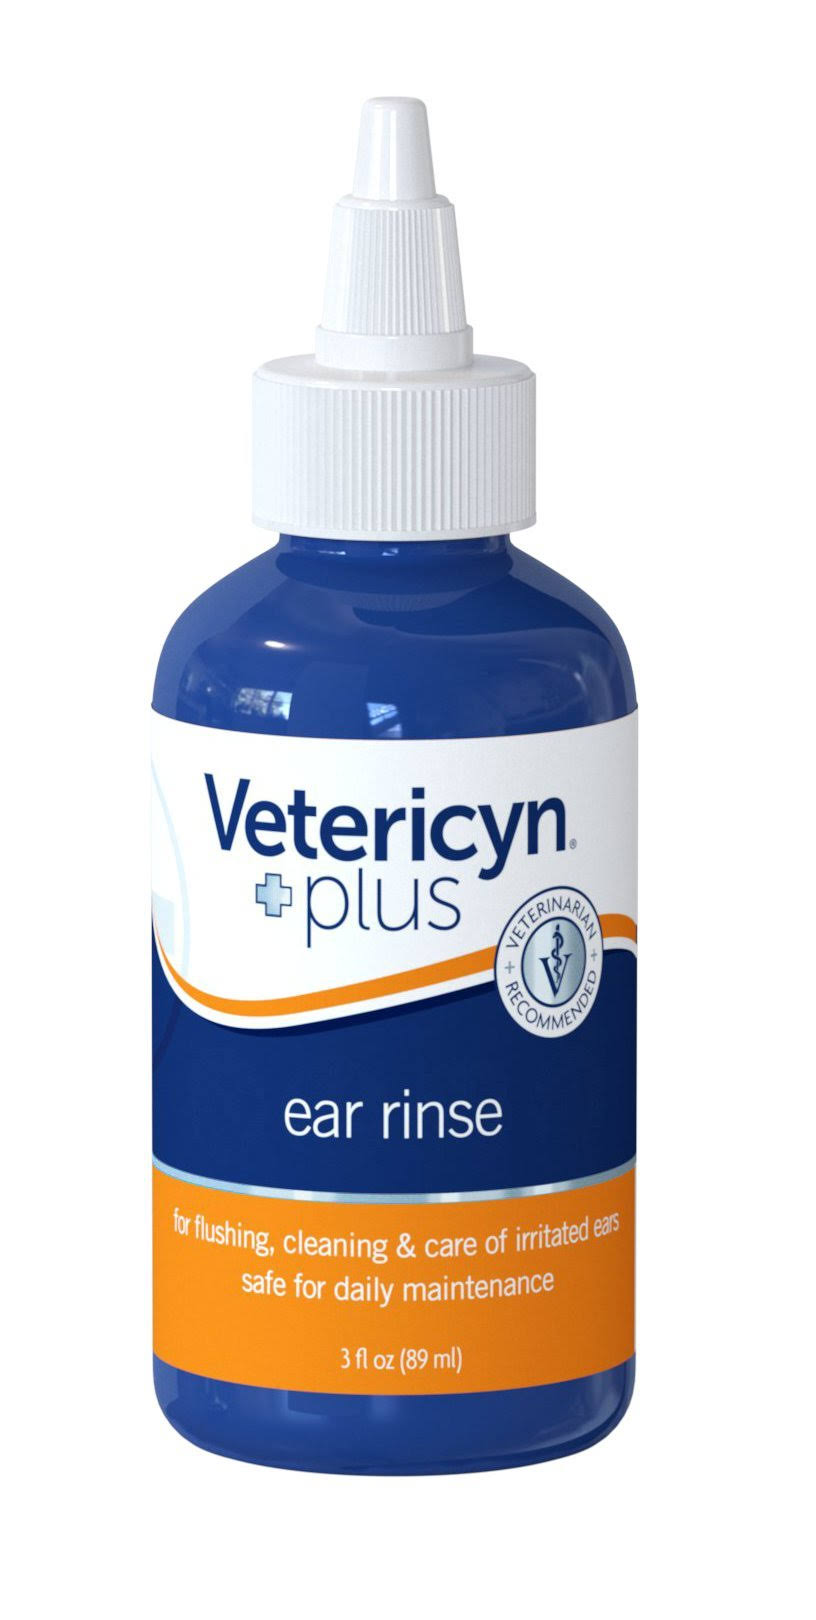 Vetericyn Plus All Animal Ear Rinse